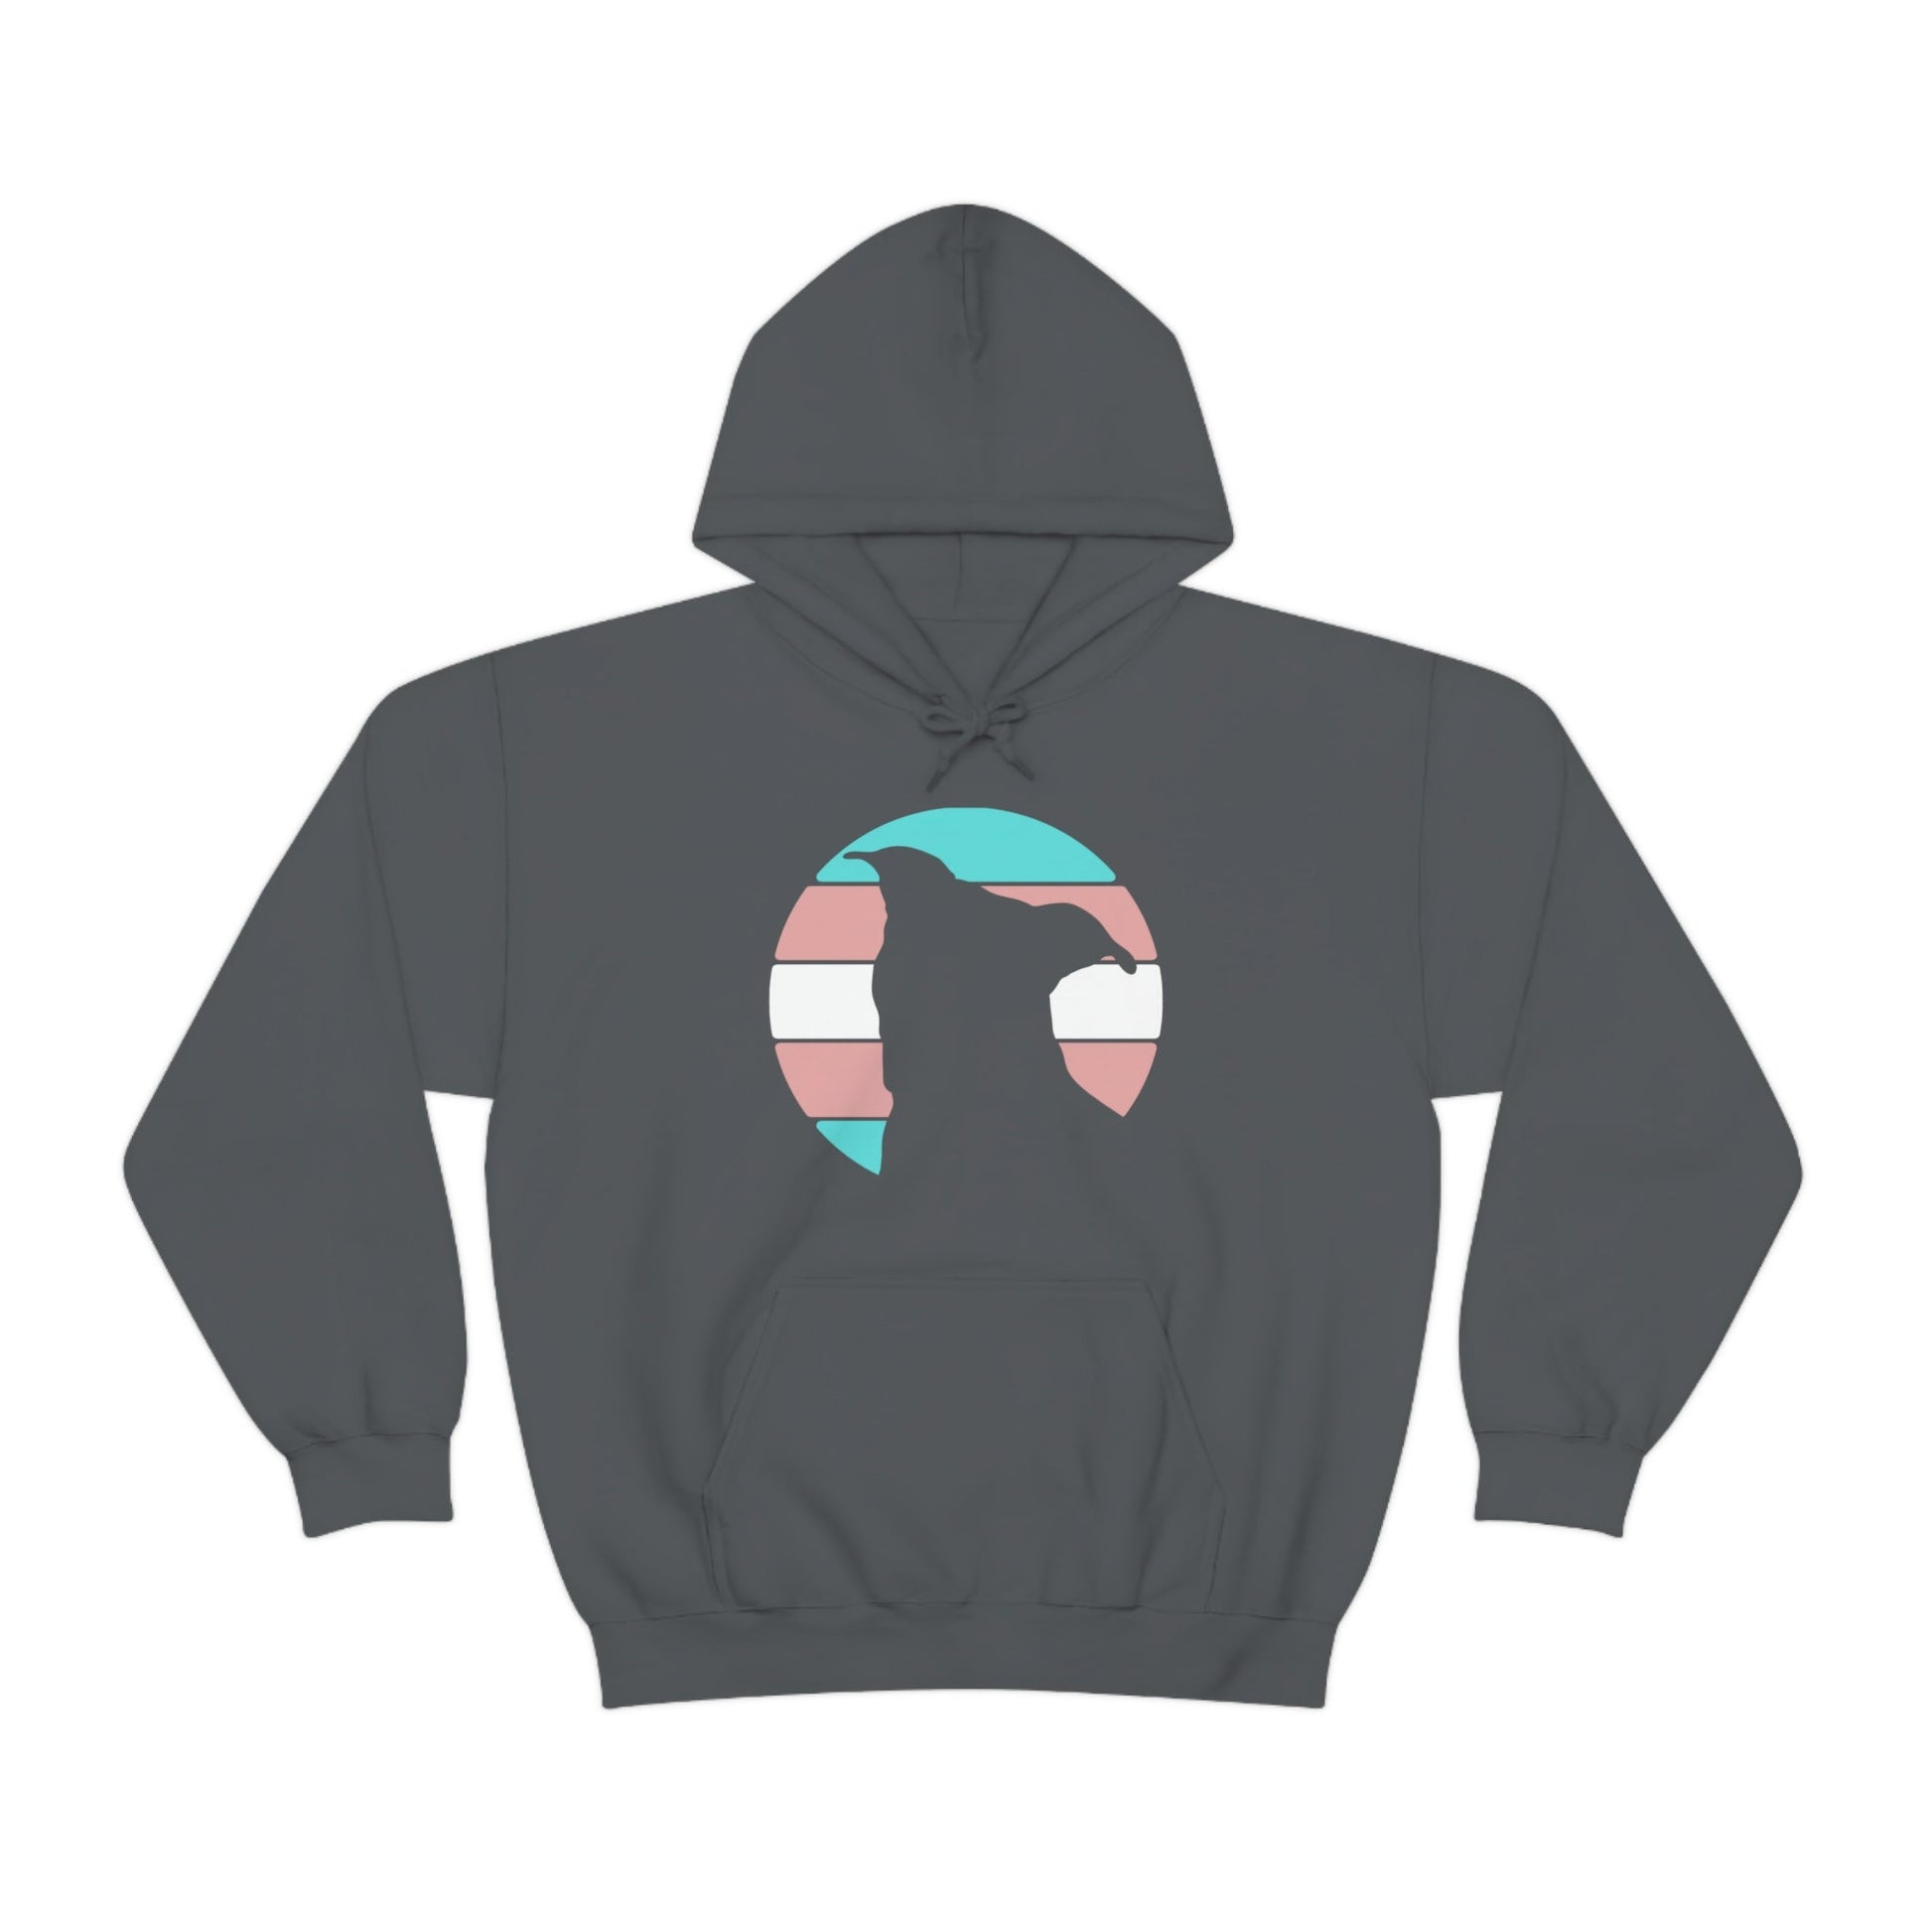 Trans Pride | Pit Bull Silhouette | Hooded Sweatshirt - Detezi Designs-31141269326166273591